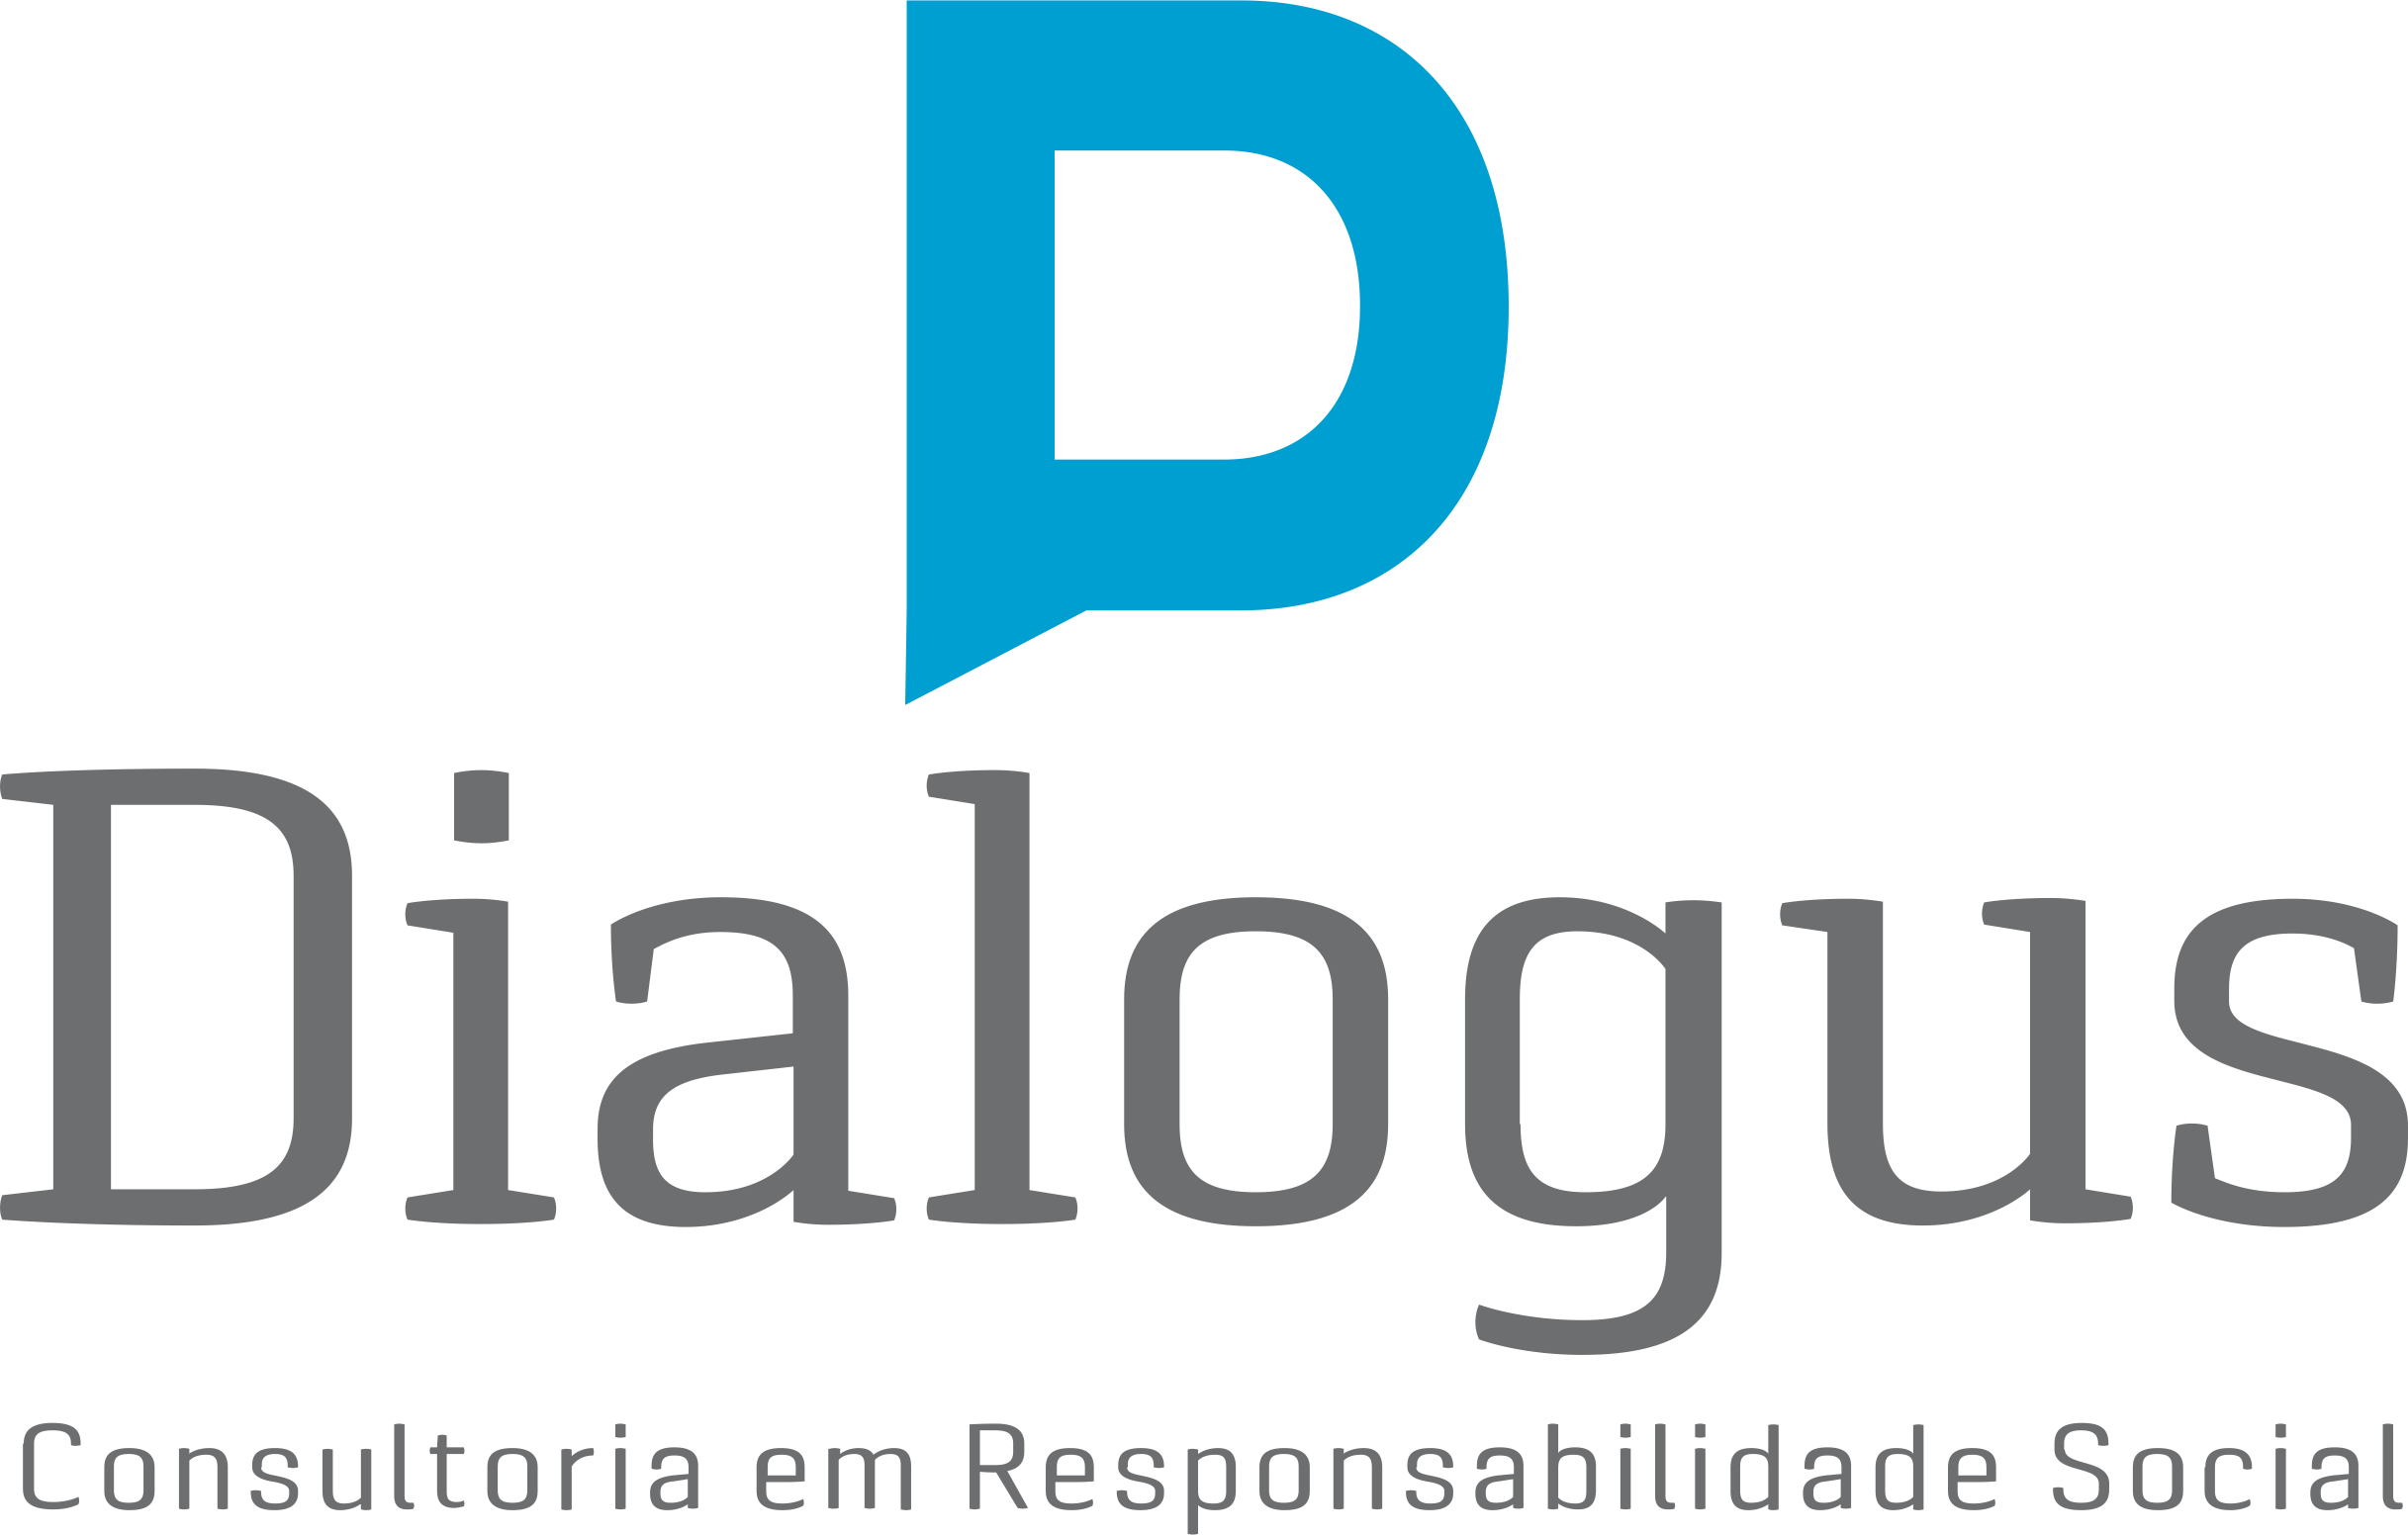 Dialogus Responsabilidade Social - Consultoria - Comitê de Sustentabilidade - Fortaleza/CE